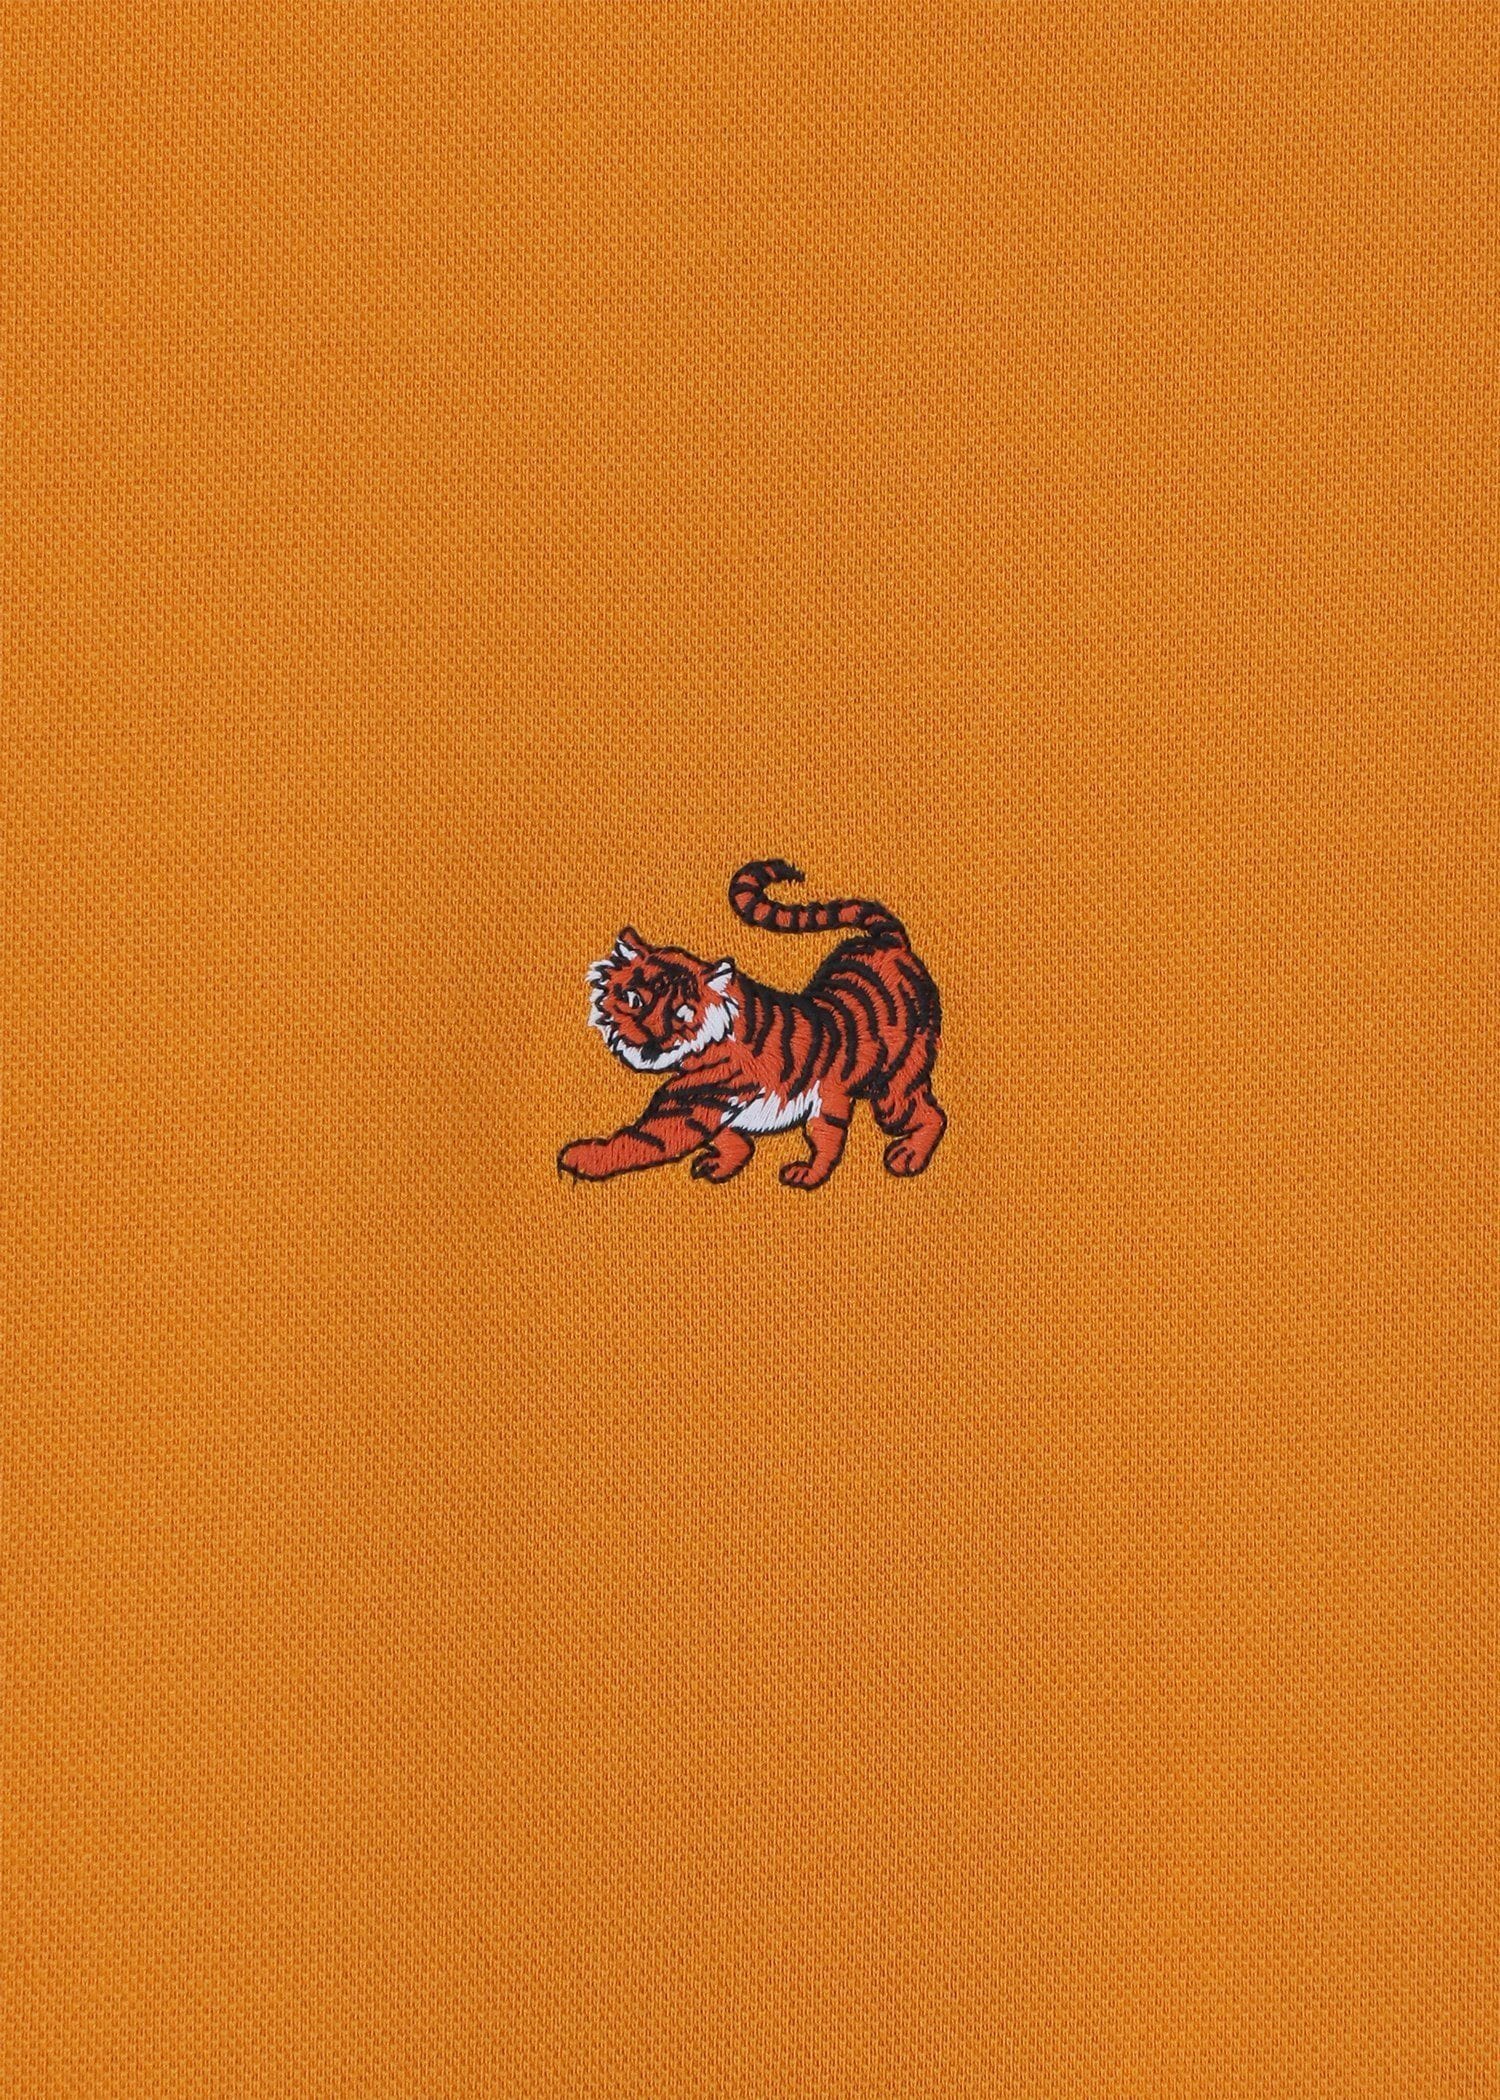 "Tiger" クルーネックTシャツ